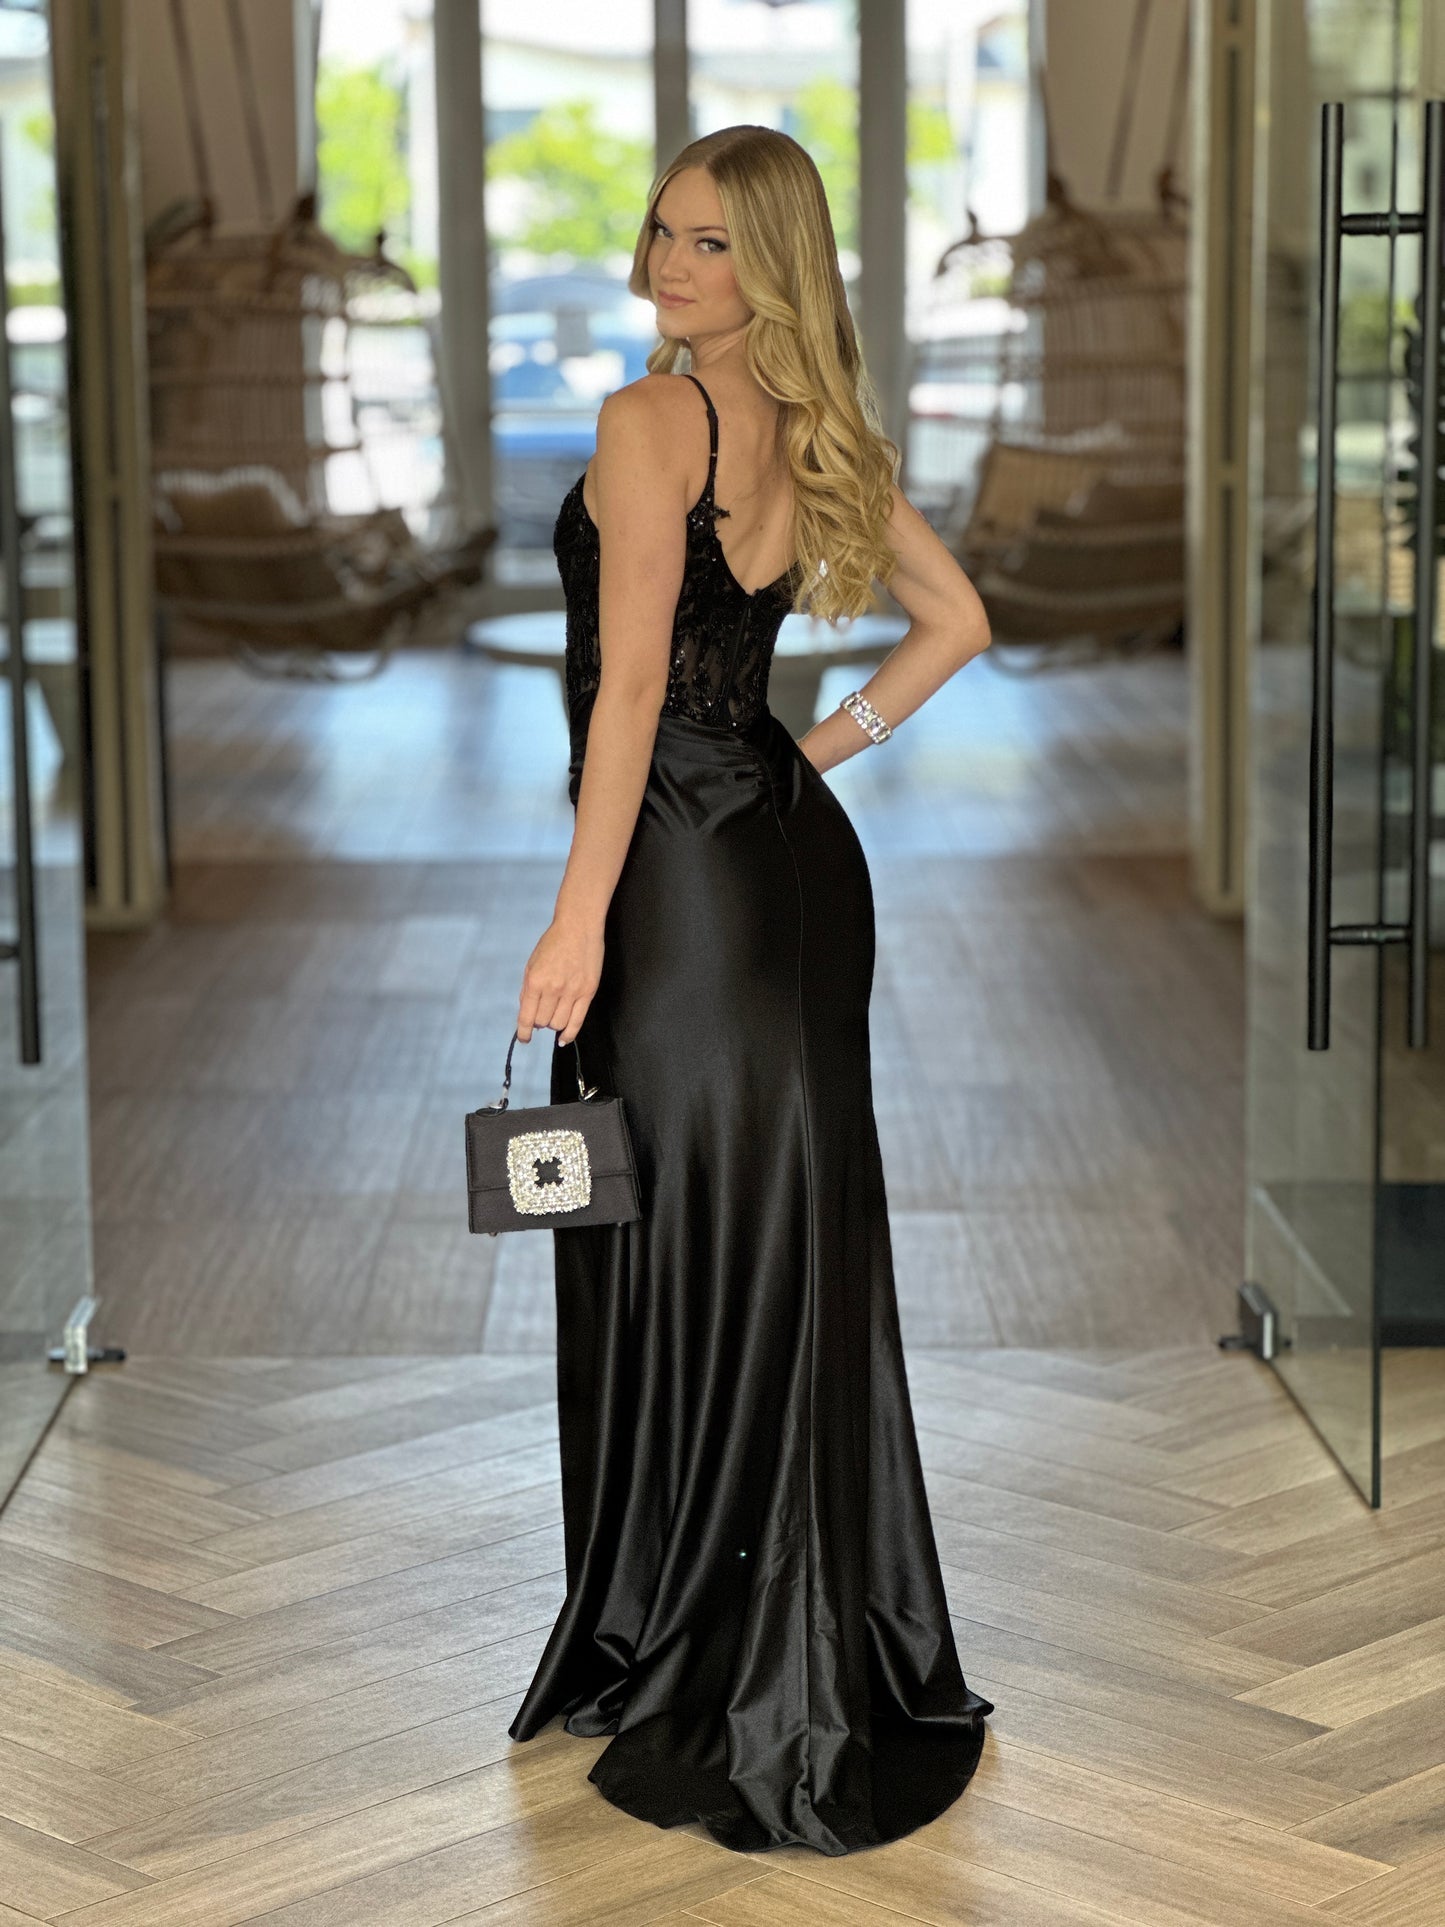 Kelly Black Embellished Dress Gala